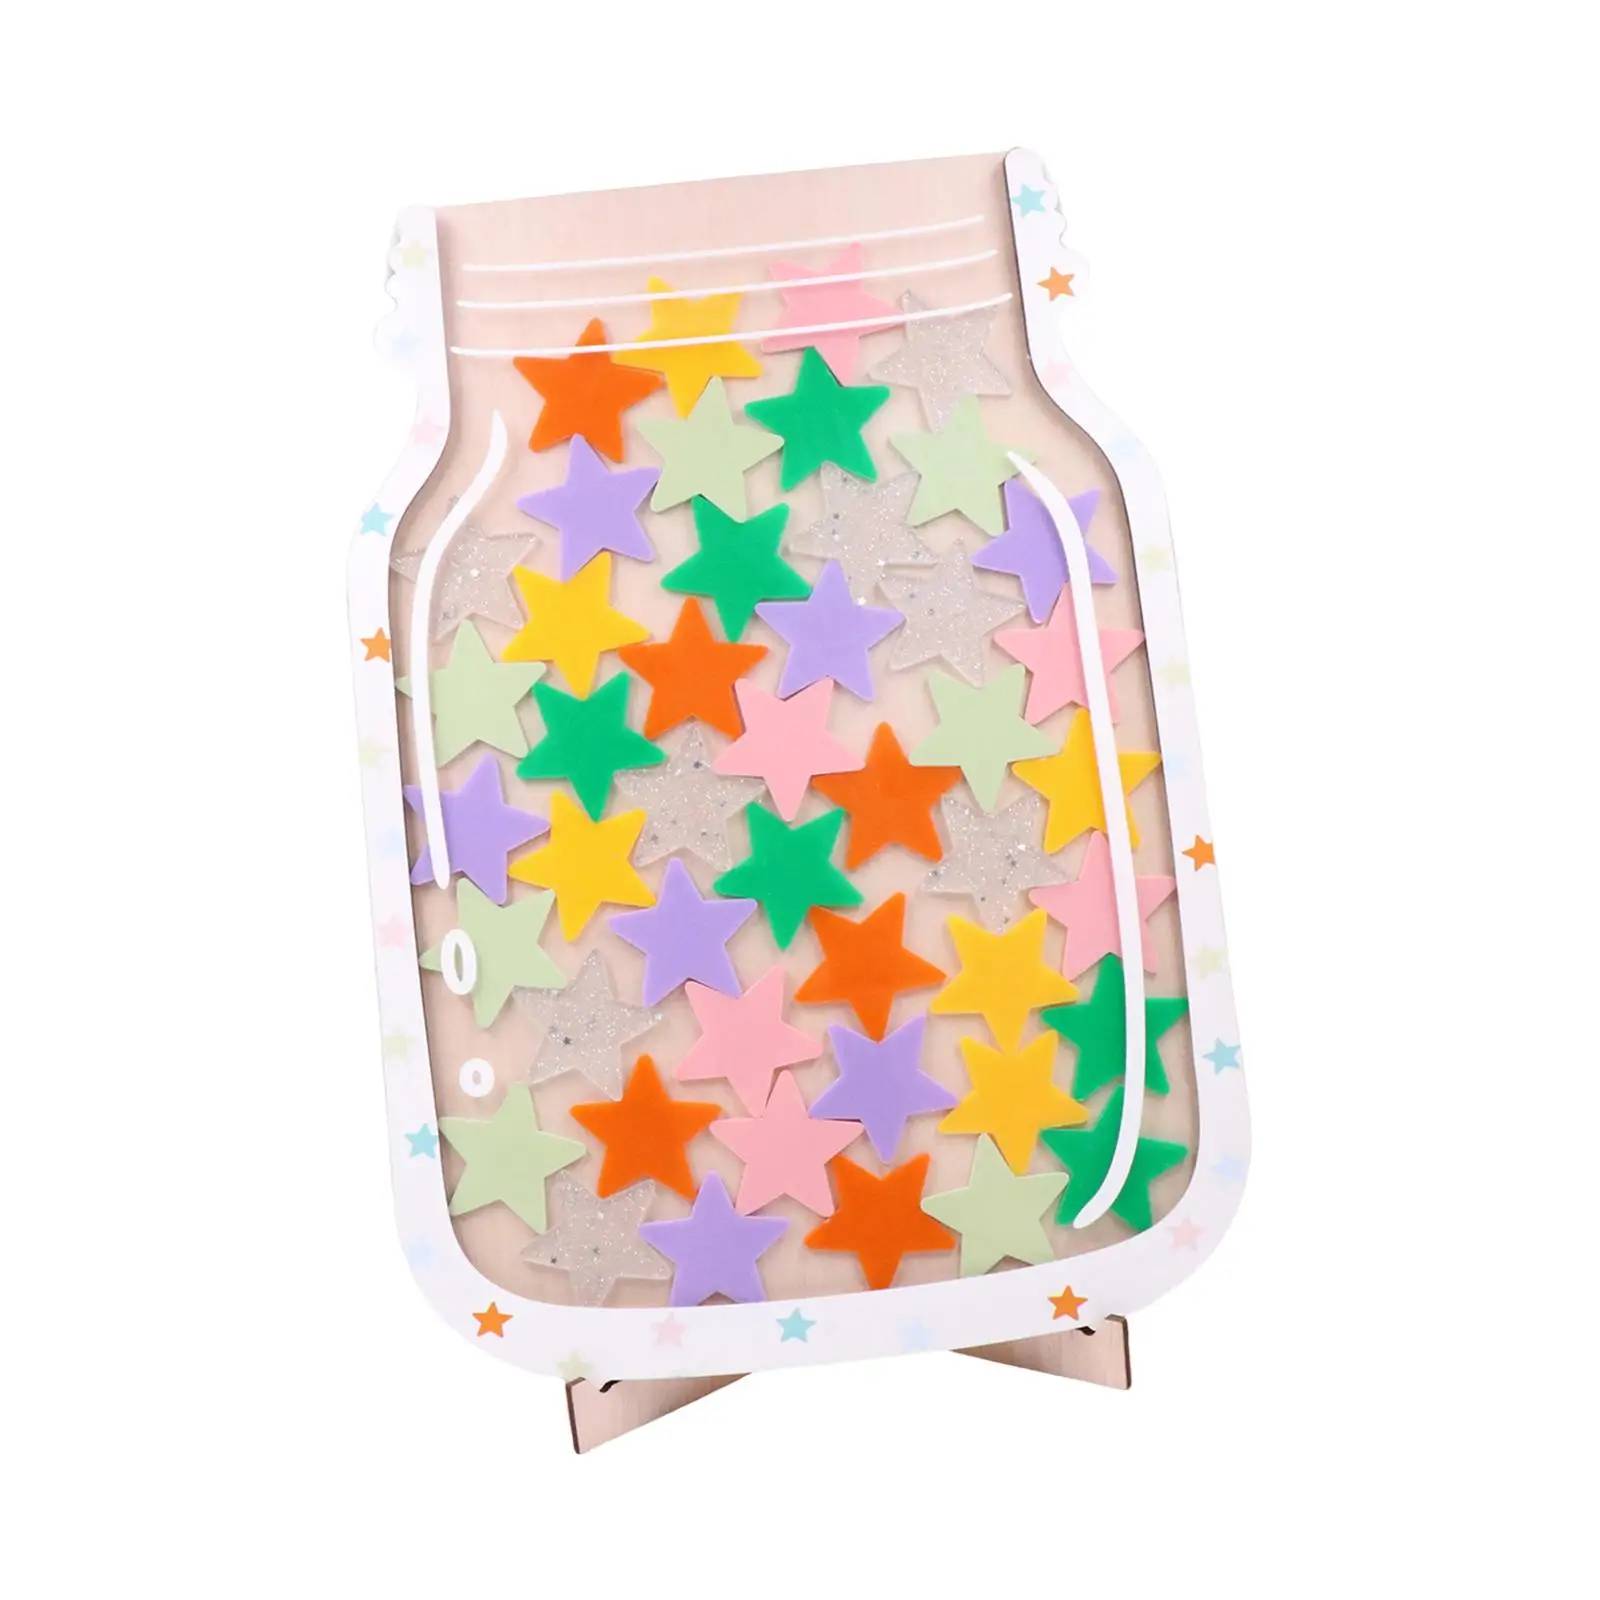 Star Reward Jar Incentive for Whiteboard Teaching Bedtime Routine Decor